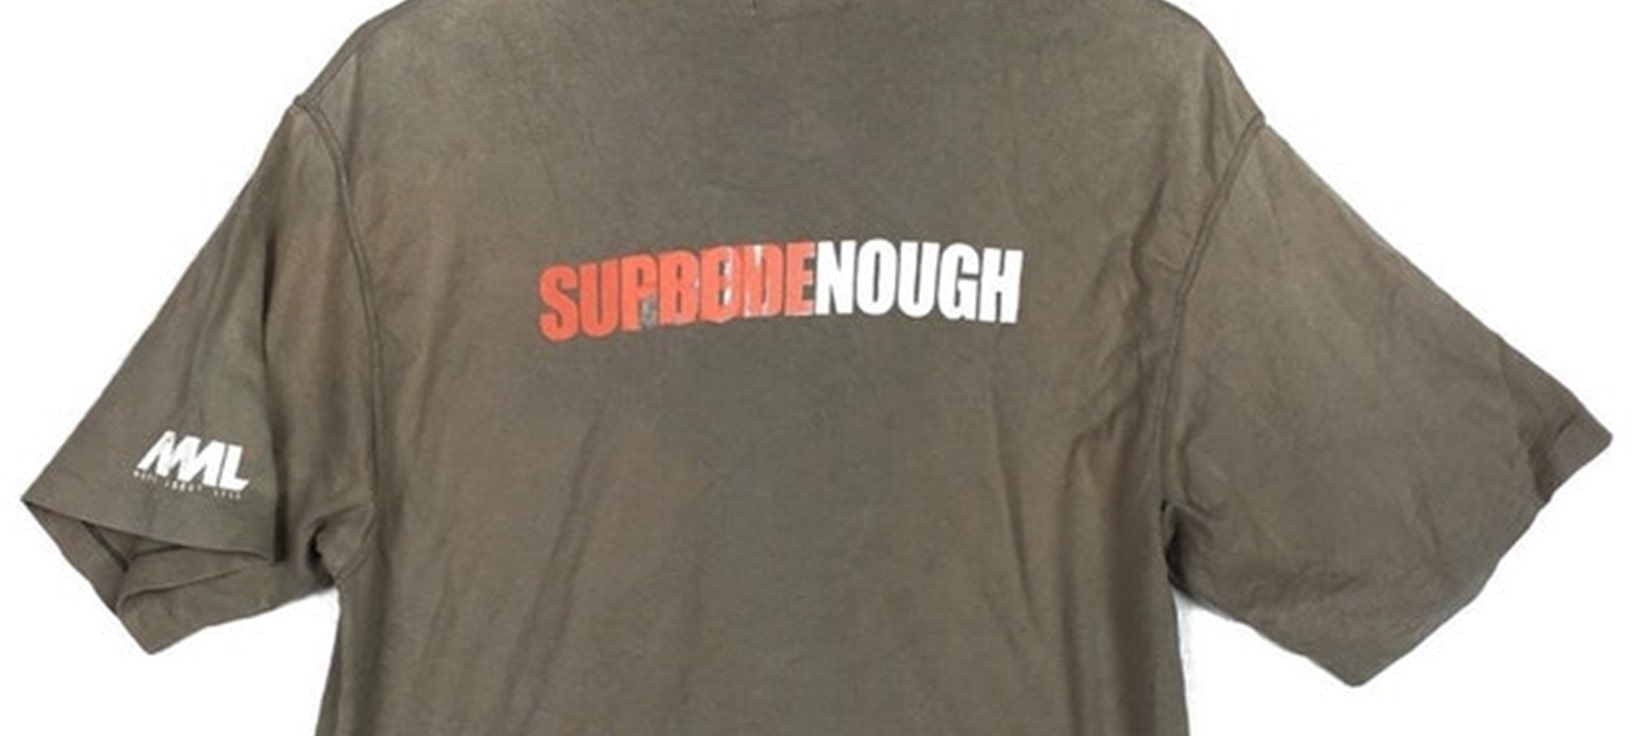 Supreme x GOODENOUGH collaborative tshirt